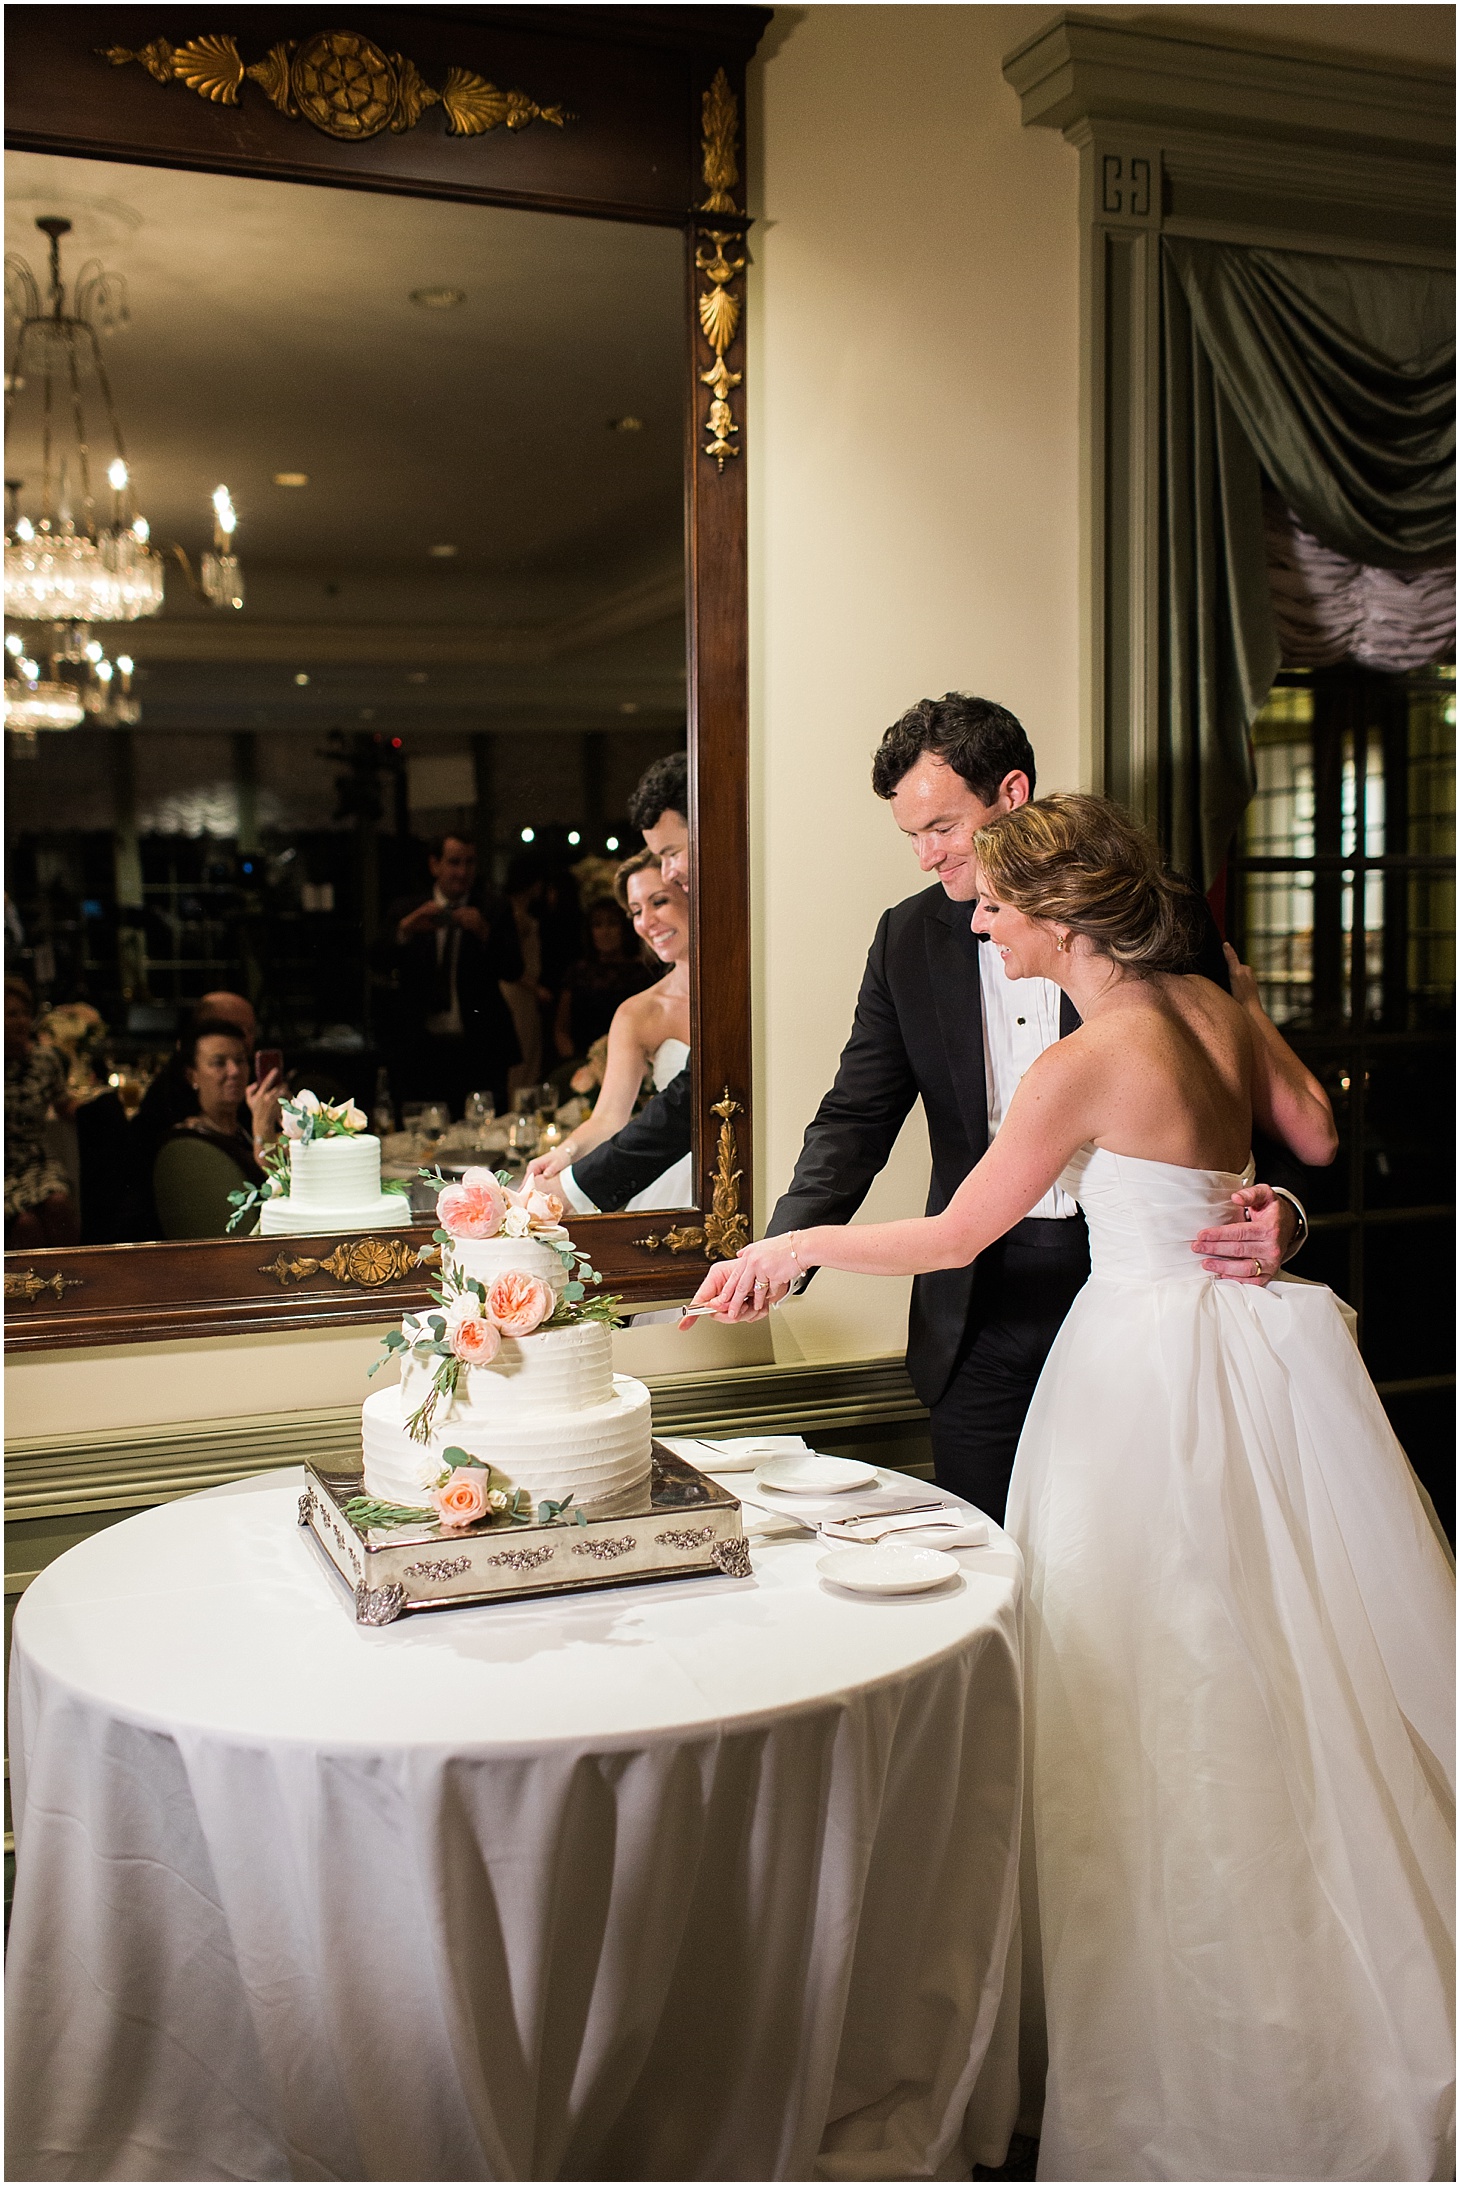 Cake Cutting at the Williamsburg Inn | Wedding Ceremony at St. Olaf Catholic Church | Blush and Black Tie Wedding in Williamsburg, VA | Sarah Bradshaw Photography